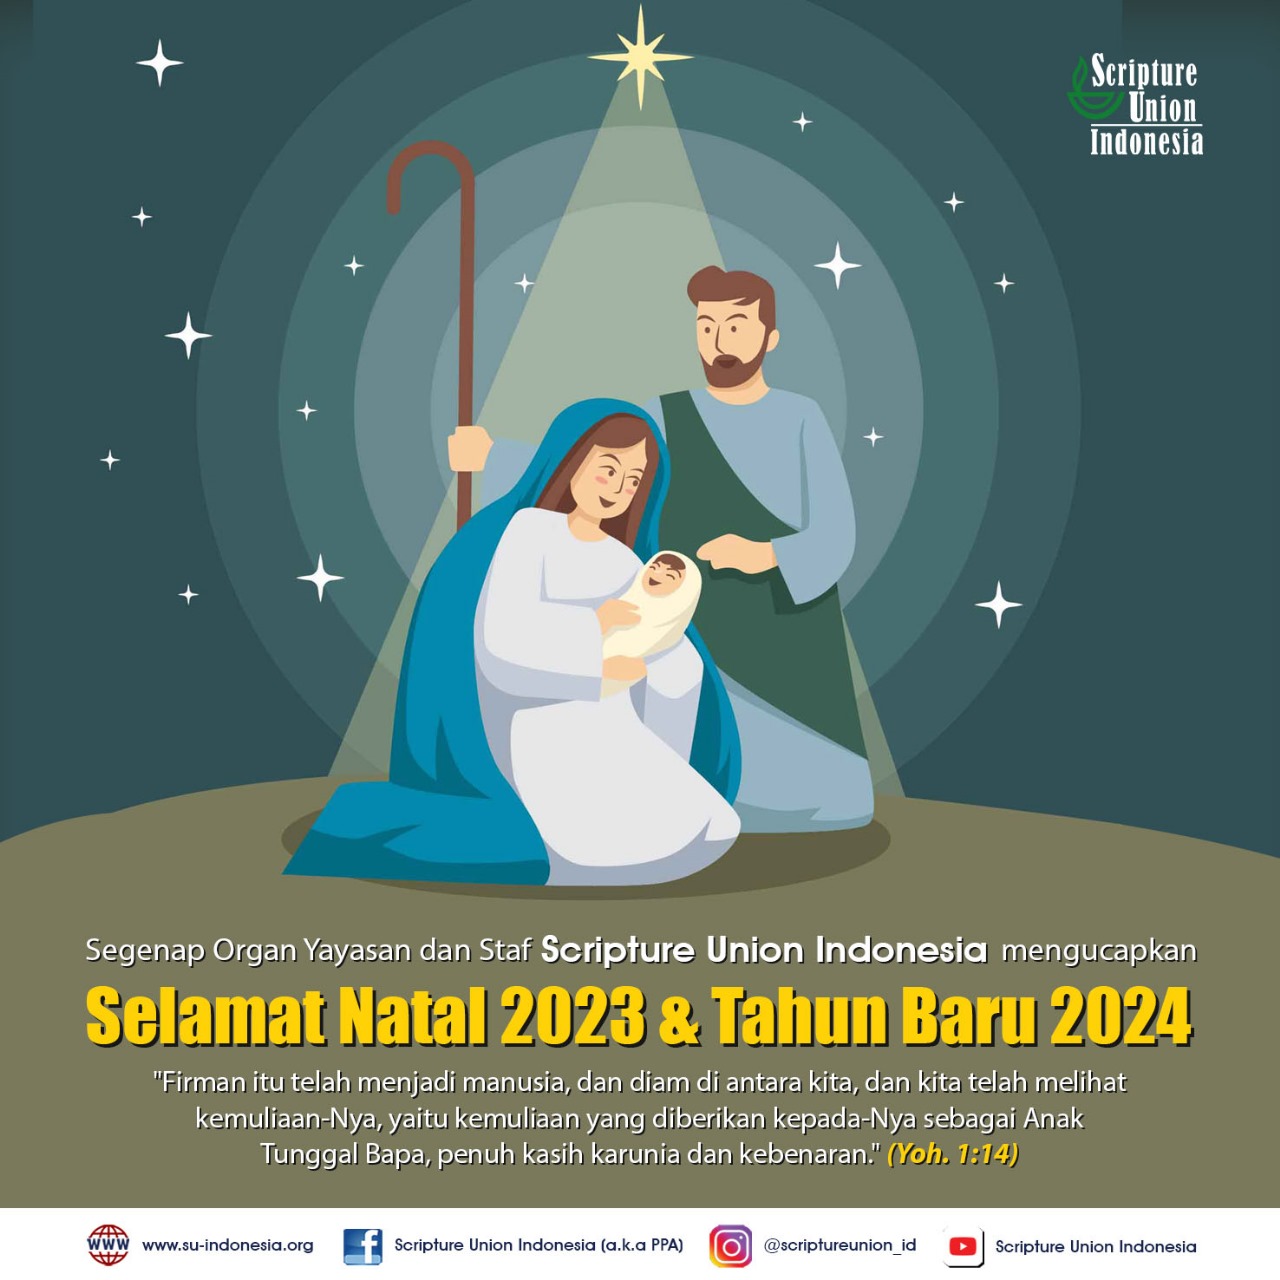 Selamat Natal 2023 & Tahun Baru 2024